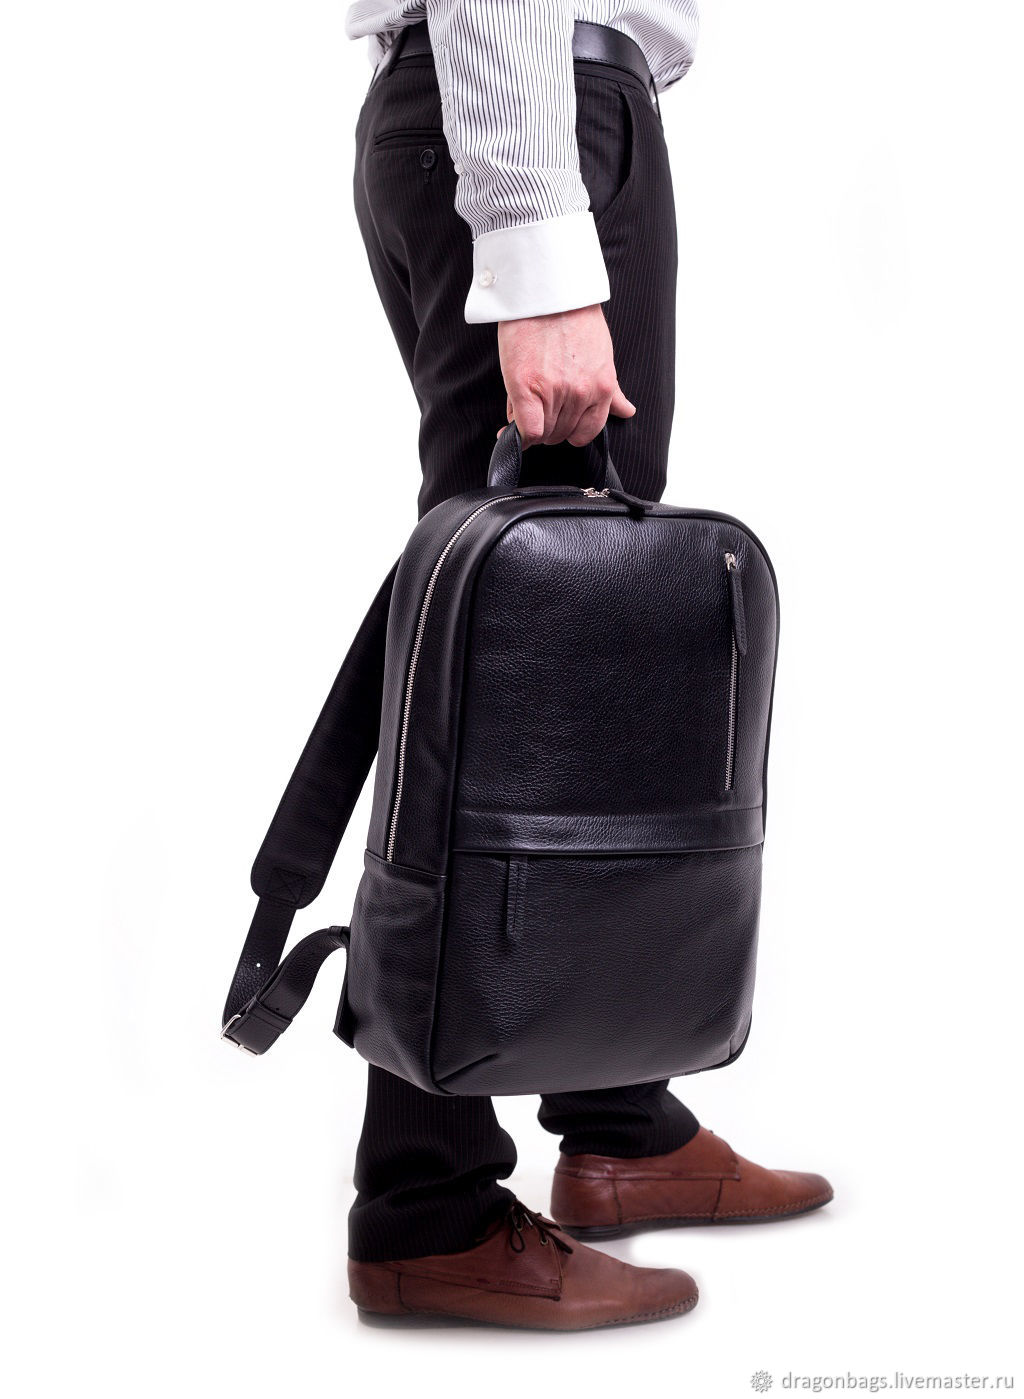 Leather backpack for men 'Tyler' (Black), Backpacks, Yaroslavl,  Фото №1